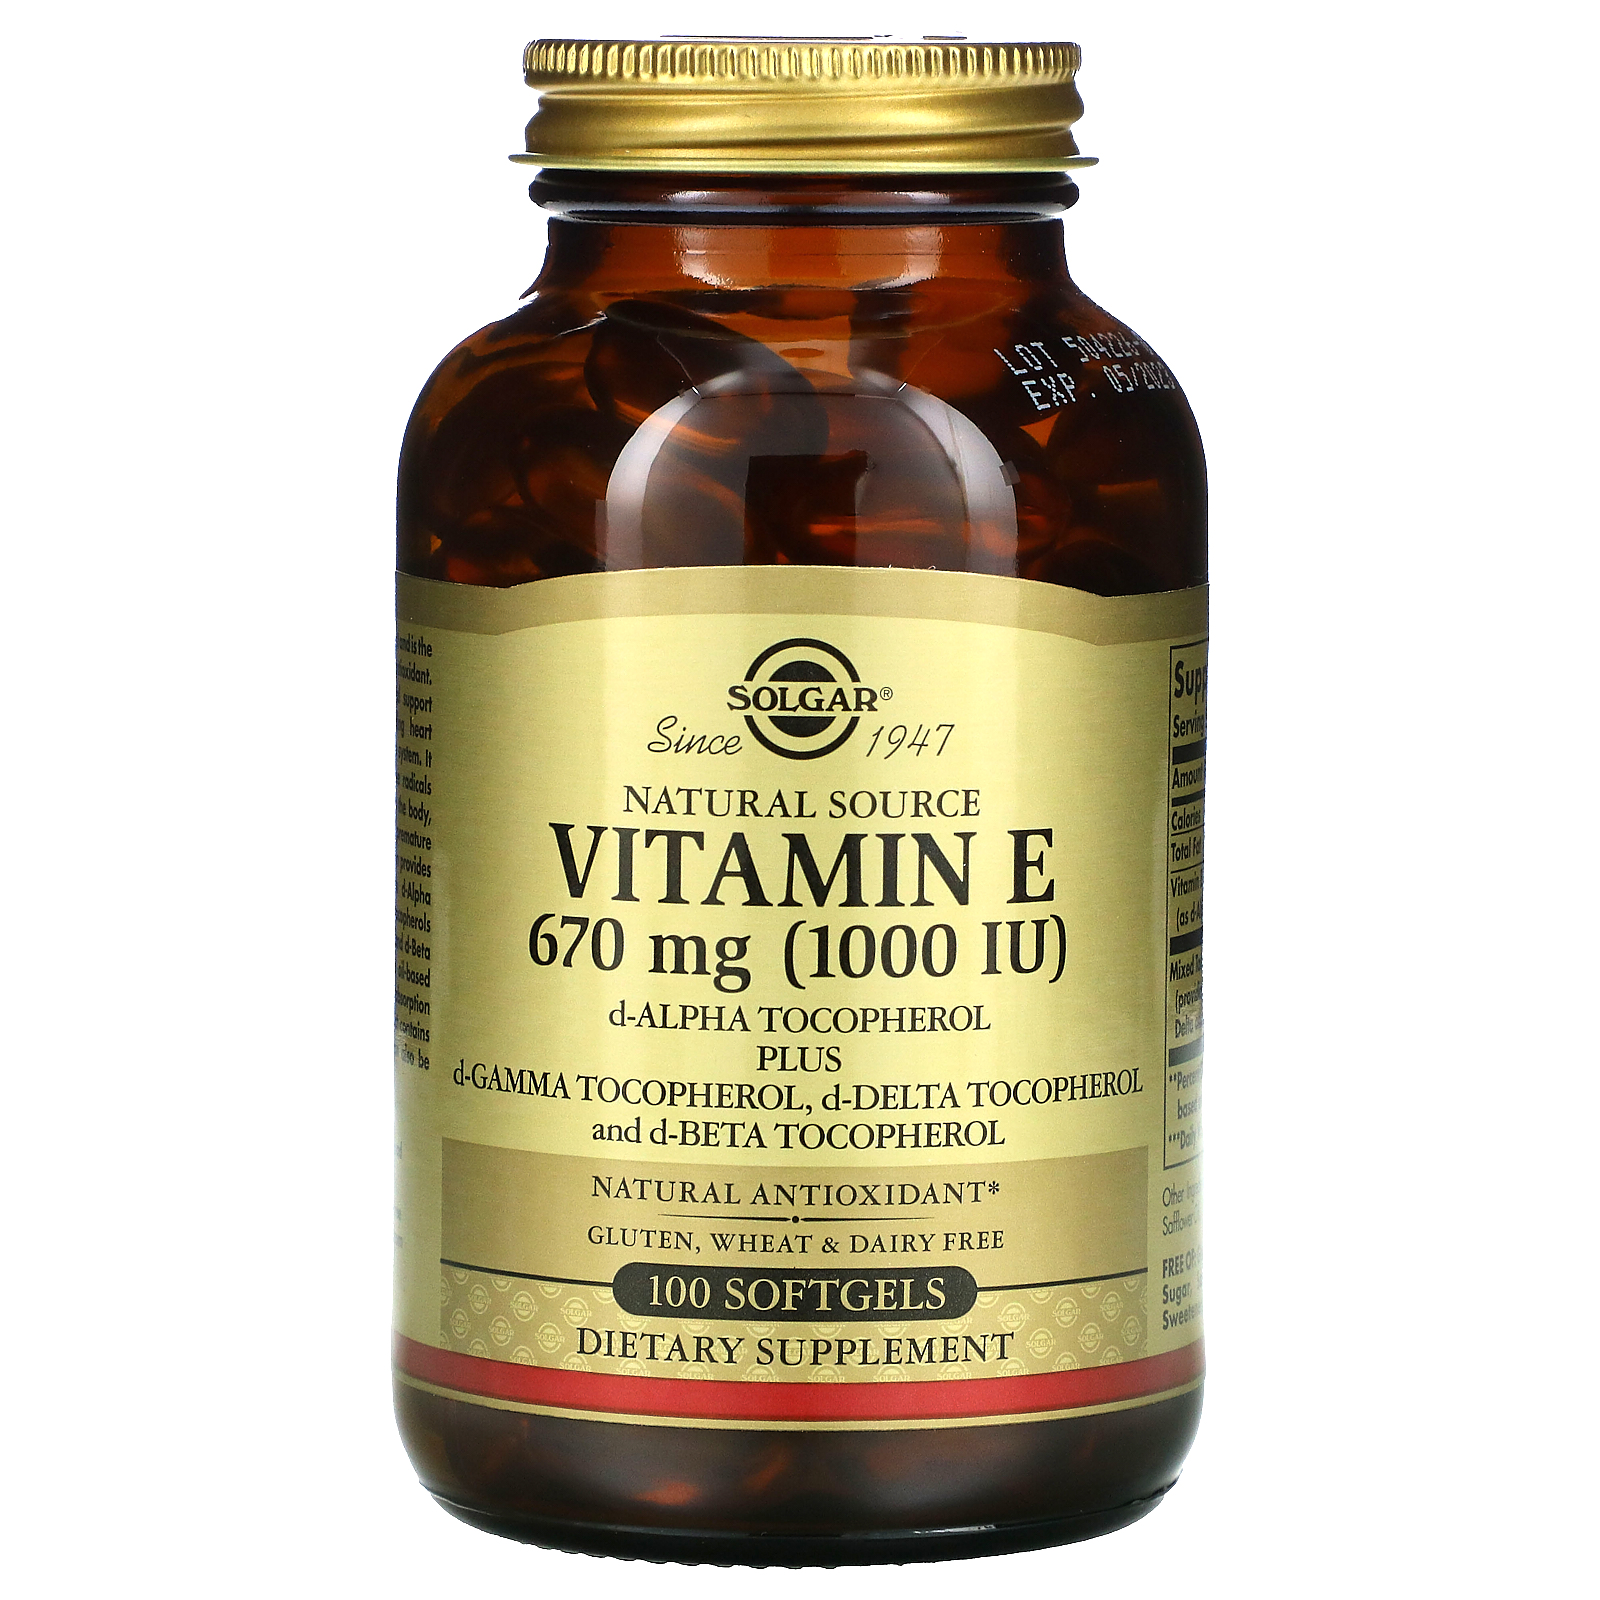 Leed Perforatie satelliet Solgar, Natural Source Vitamin E, 670 mg (1,000 IU), 100 Softgels